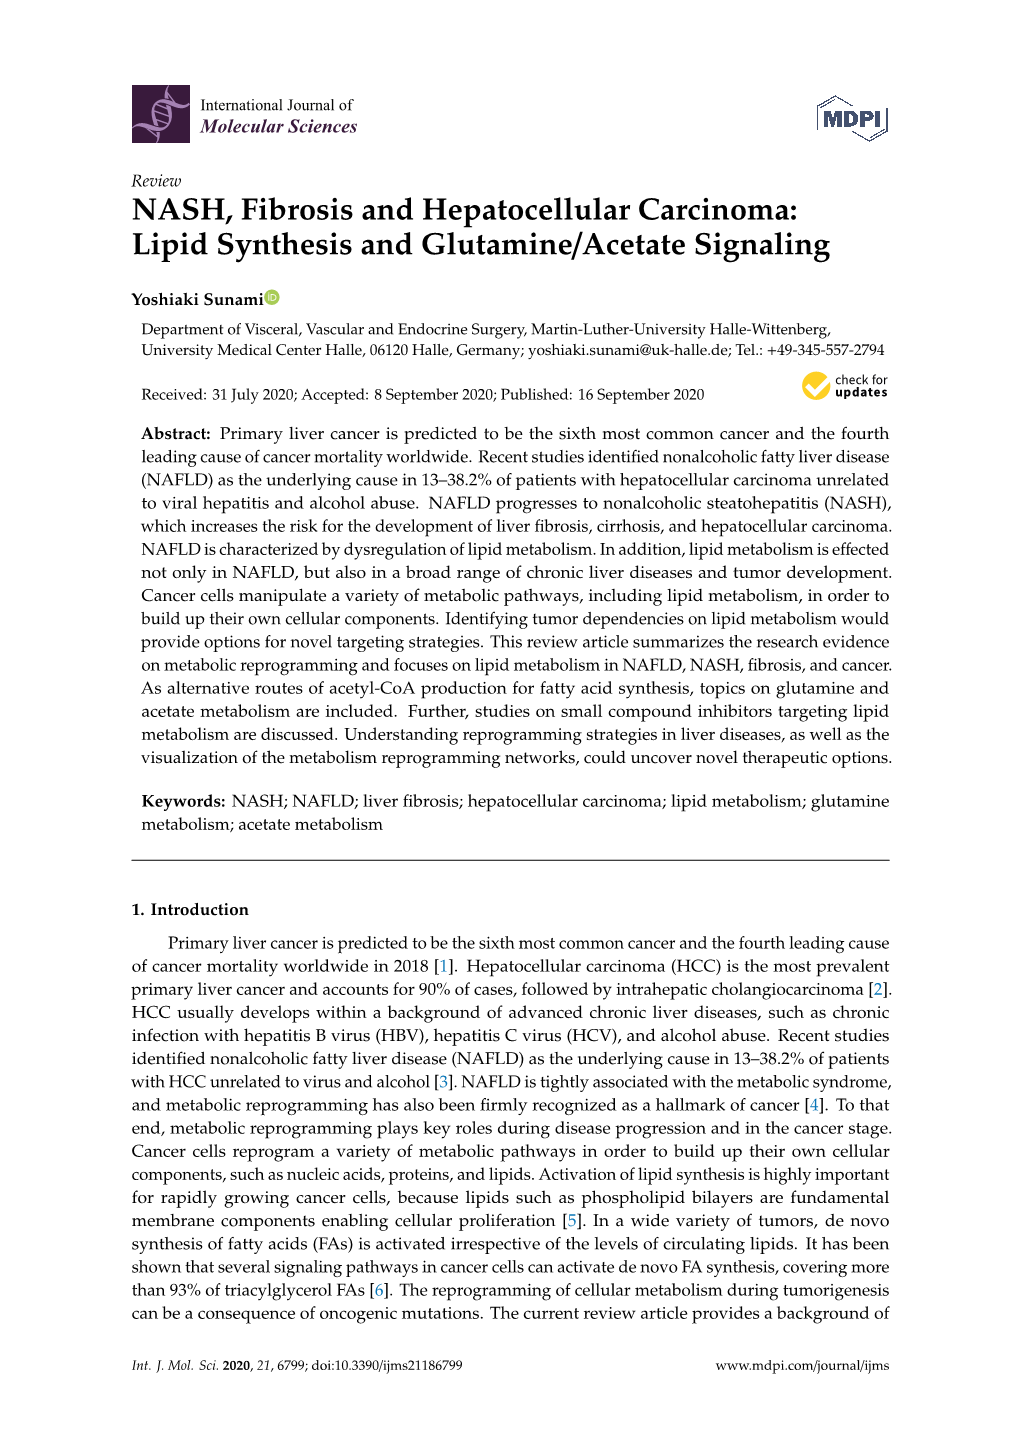 NASH, Fibrosis and Hepatocellular Carcinoma: Lipid Synthesis and Glutamine/Acetate Signaling